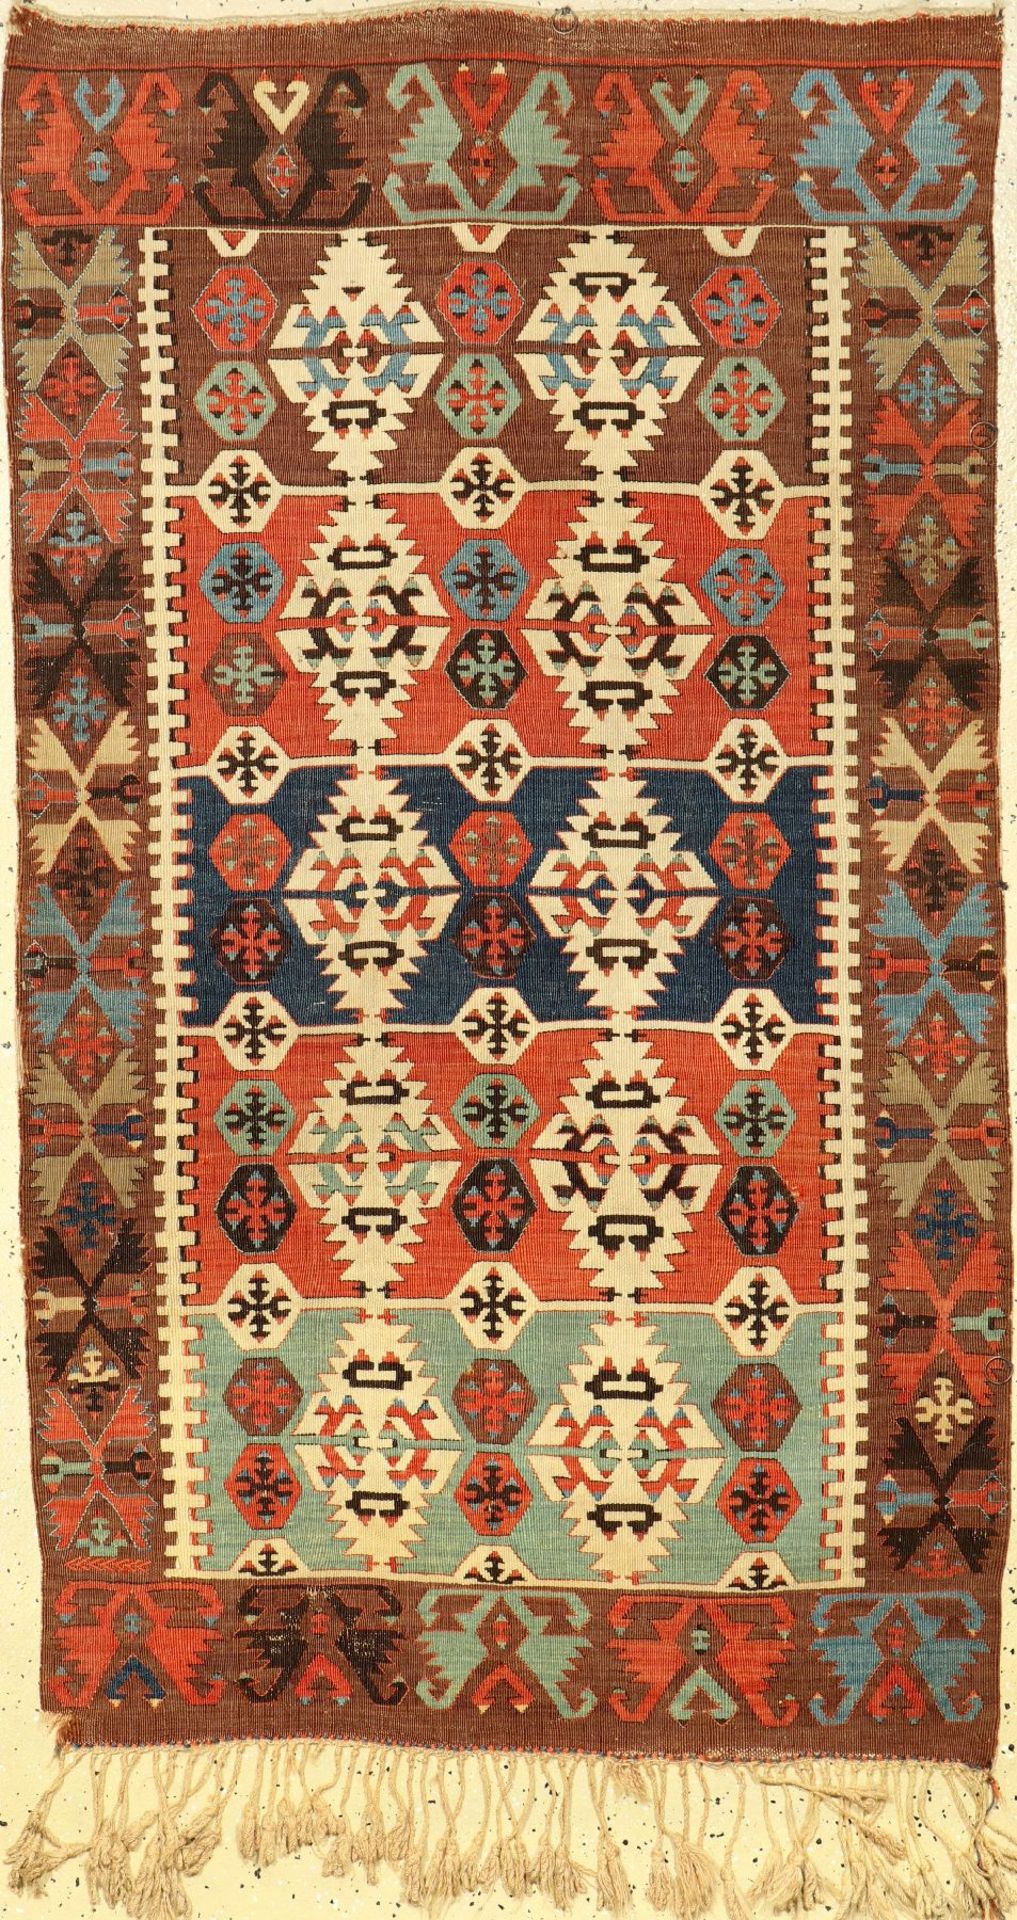 Konya "Kelim" antik (Elibelinde Muster), Zentralanatolien, 19.Jhd., Wolle gewebt auf Wolle. Seltener